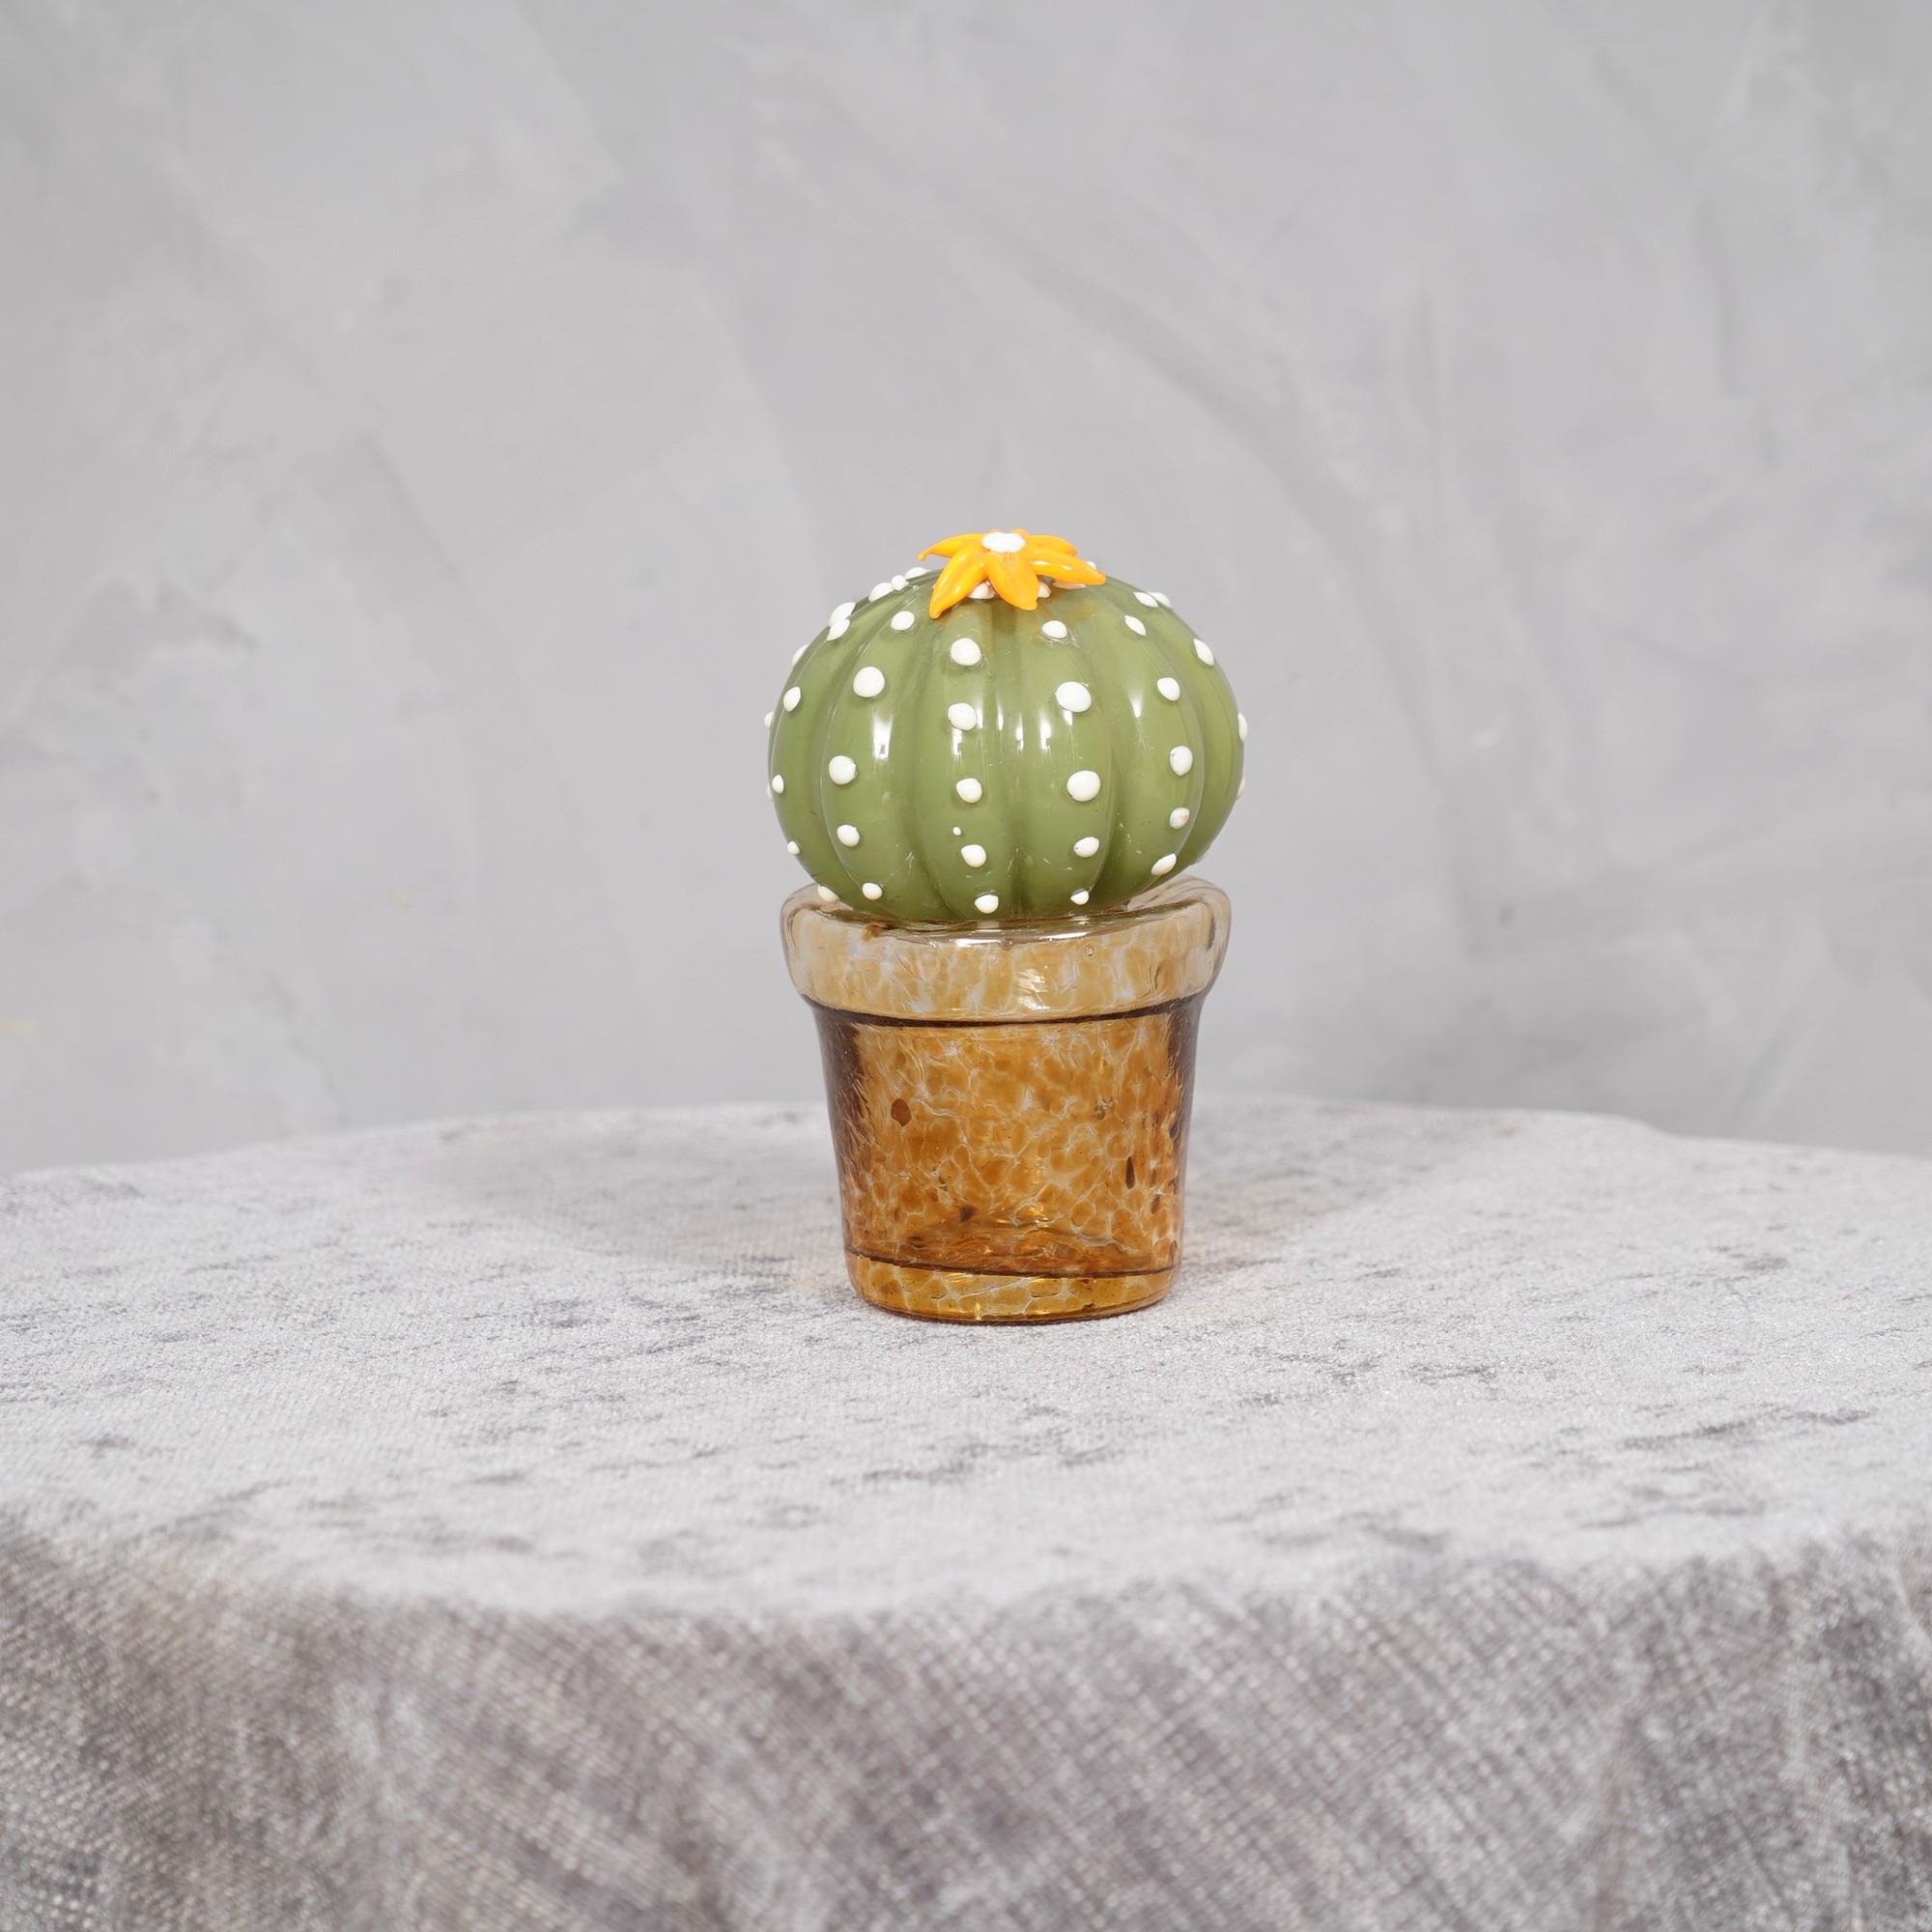 pumpkin decorated as a cactus